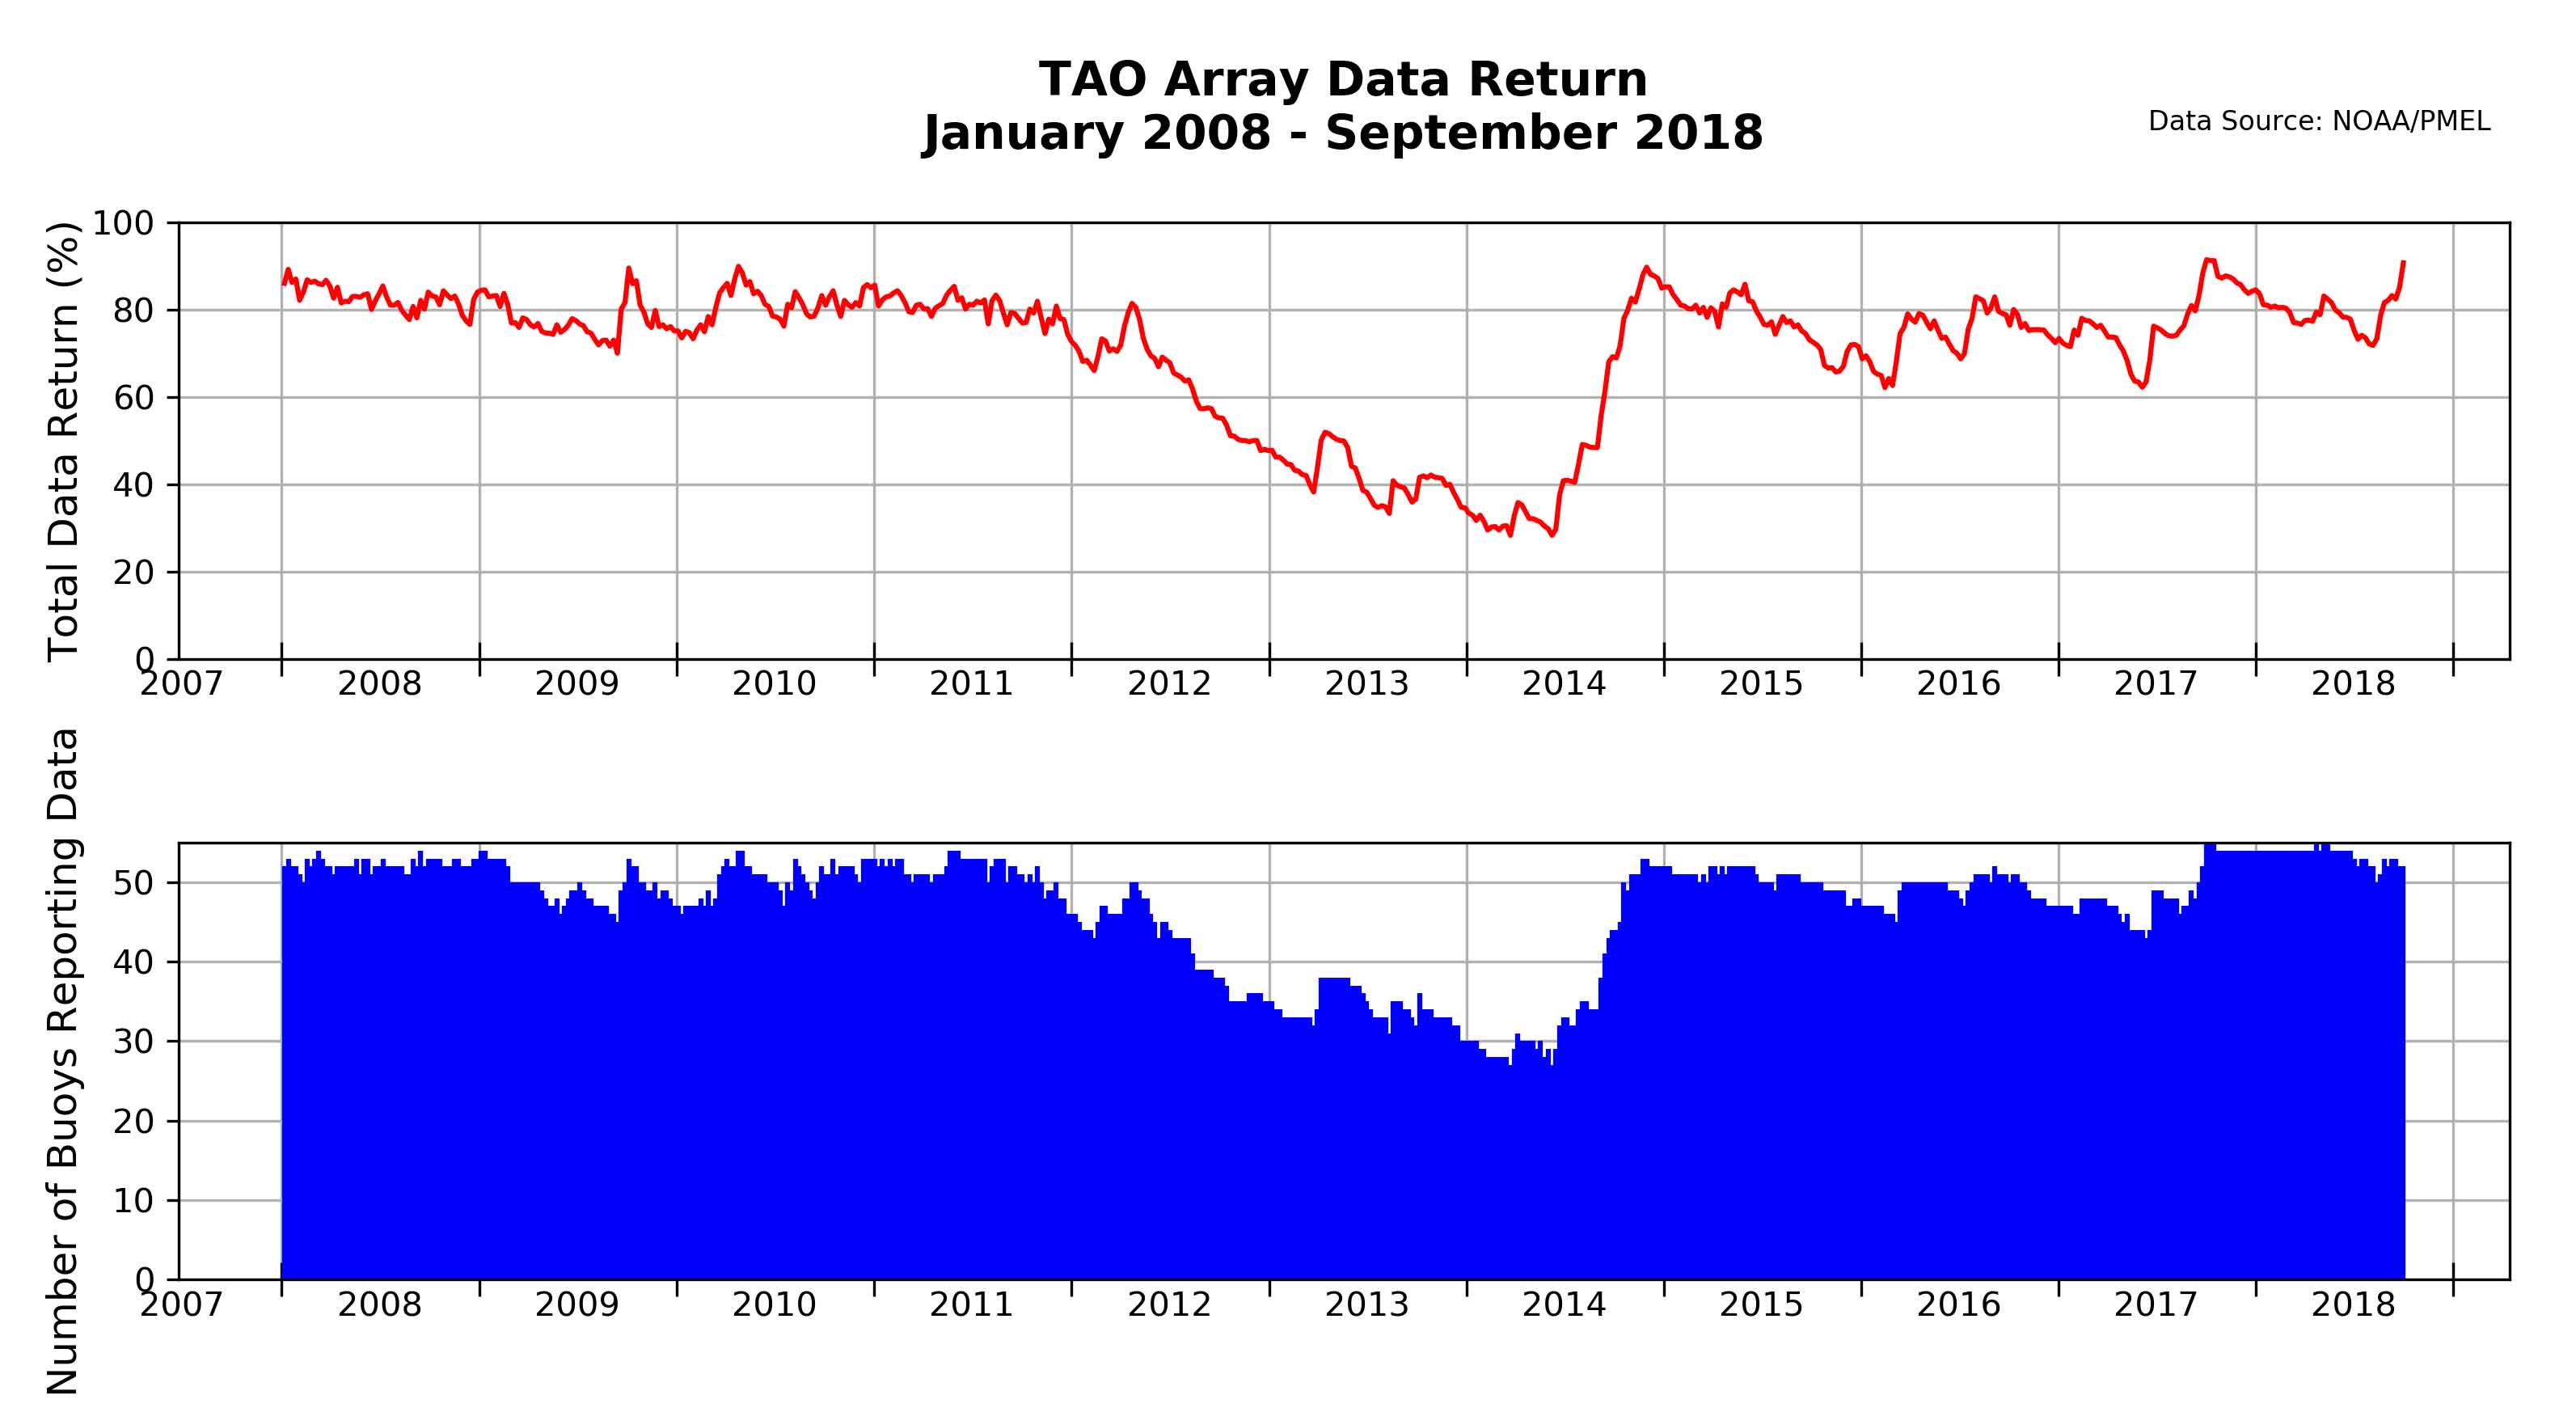 Historic TAO Data Return